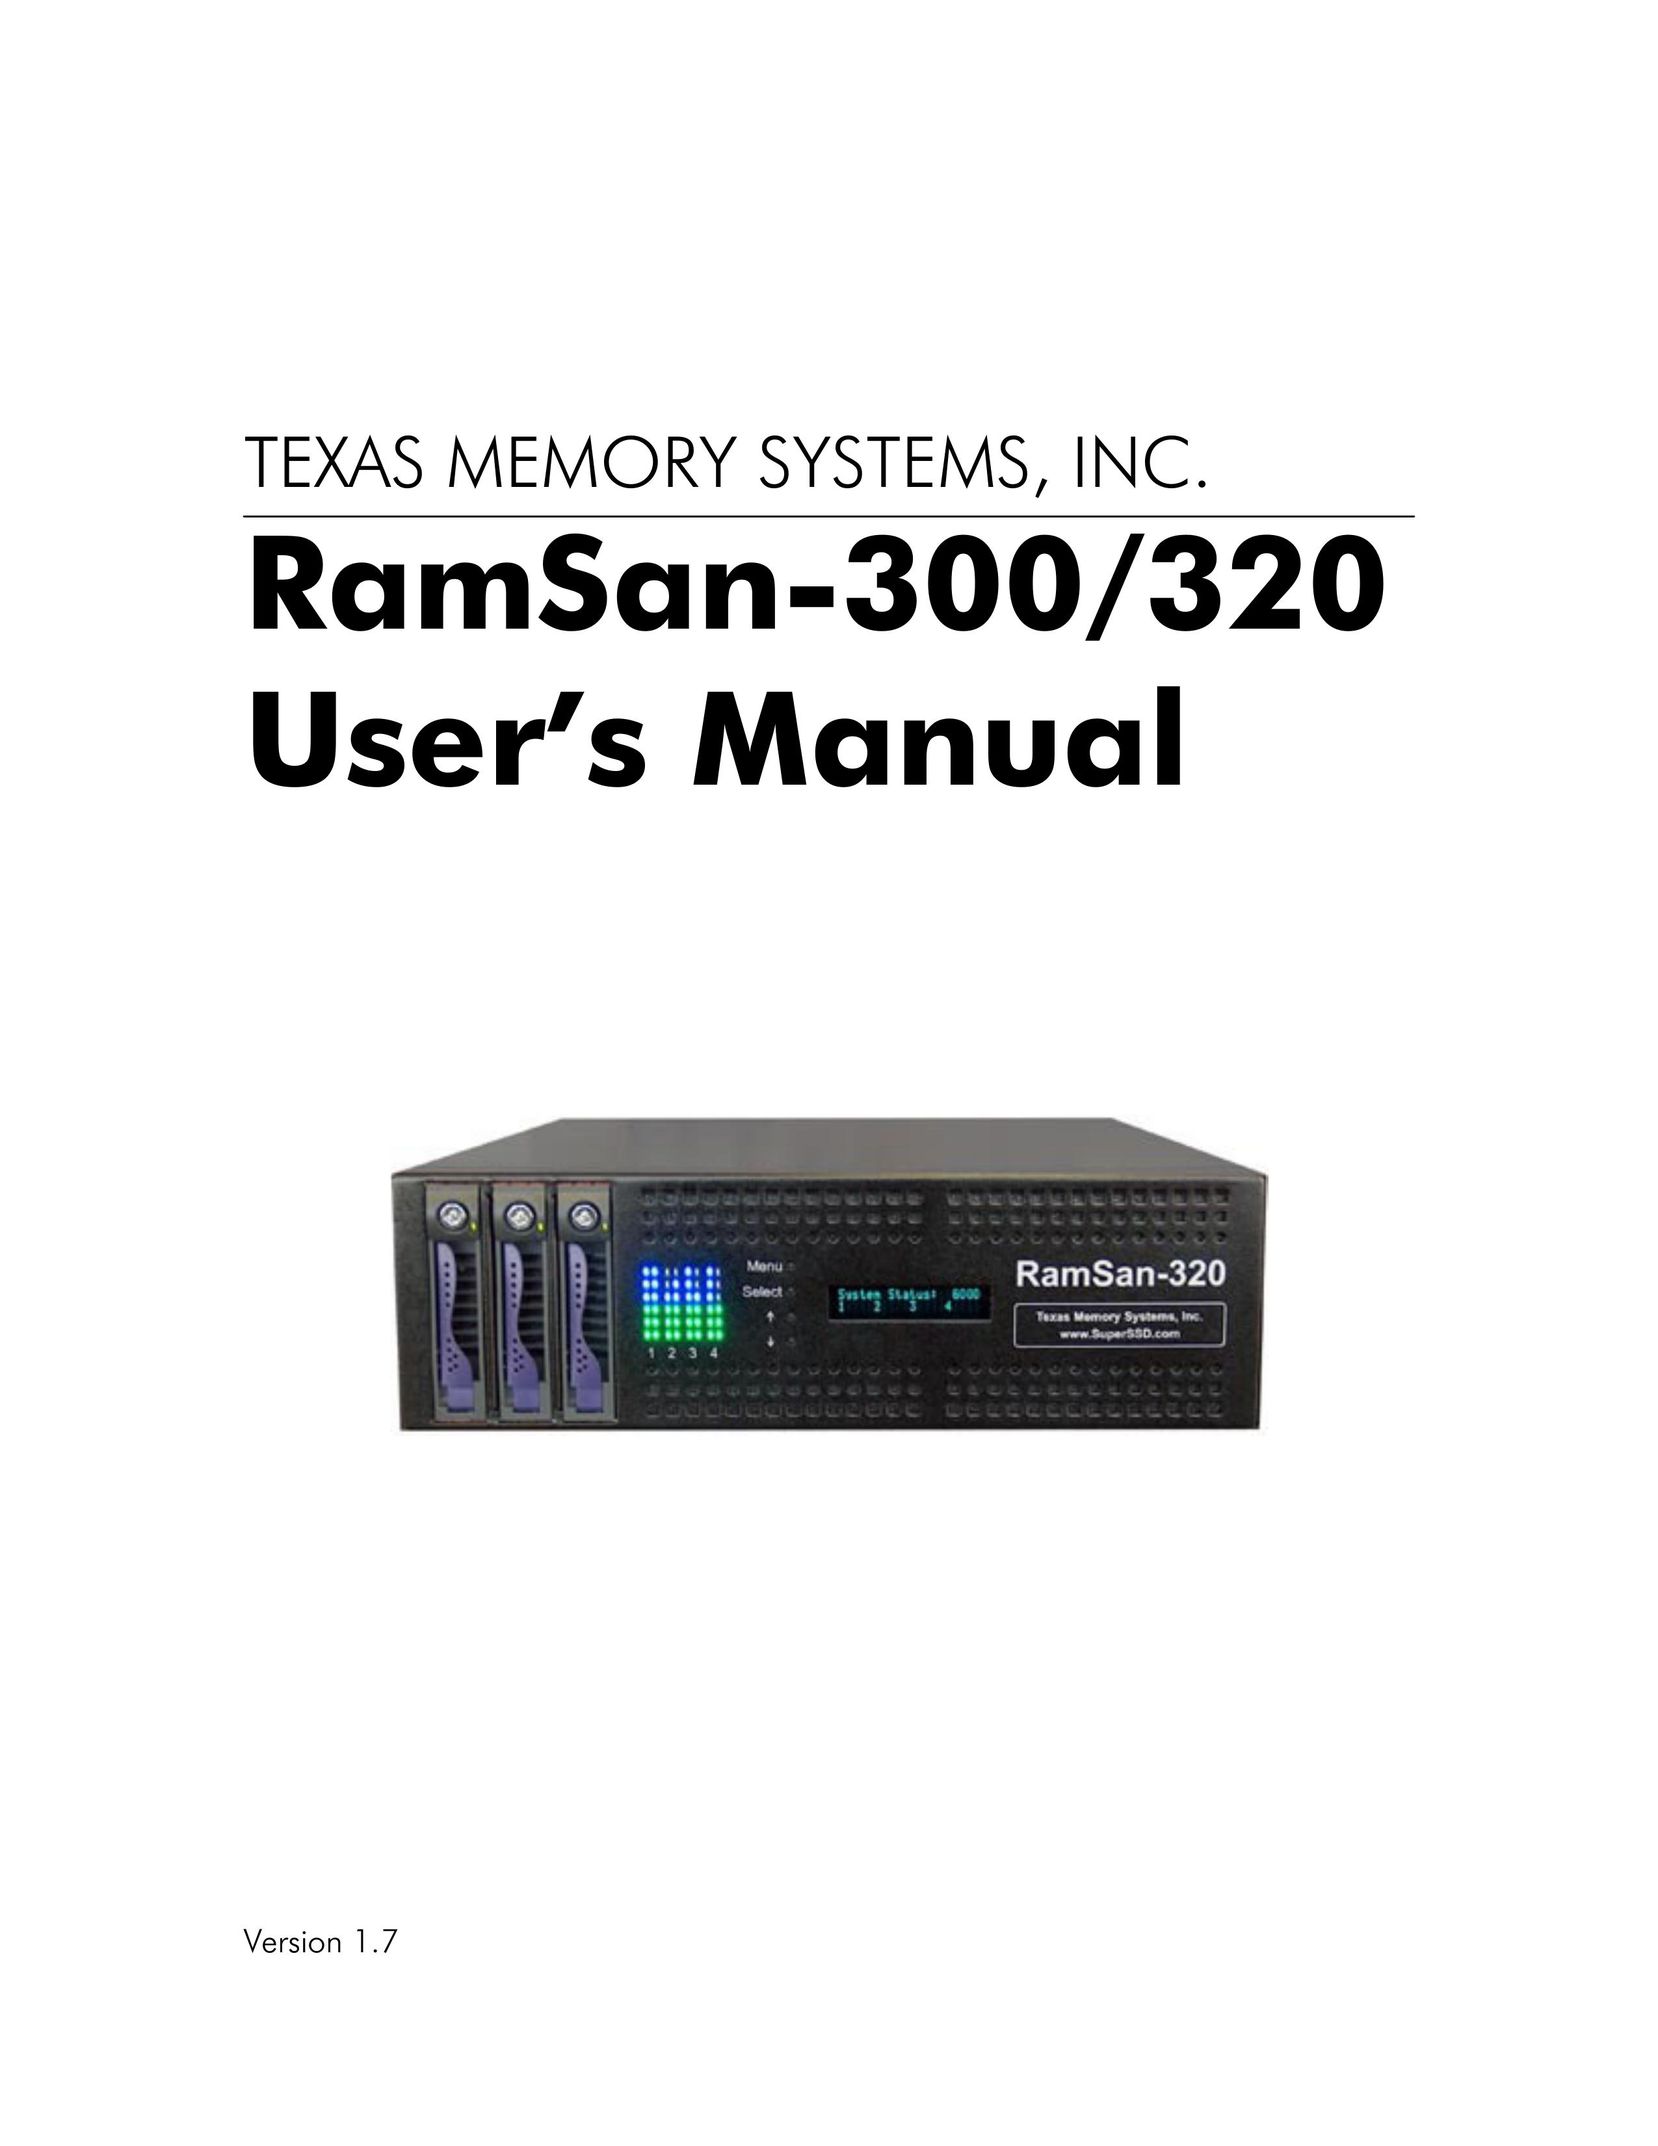 Texas Memory Systems RamSan-300/320 Power Supply User Manual